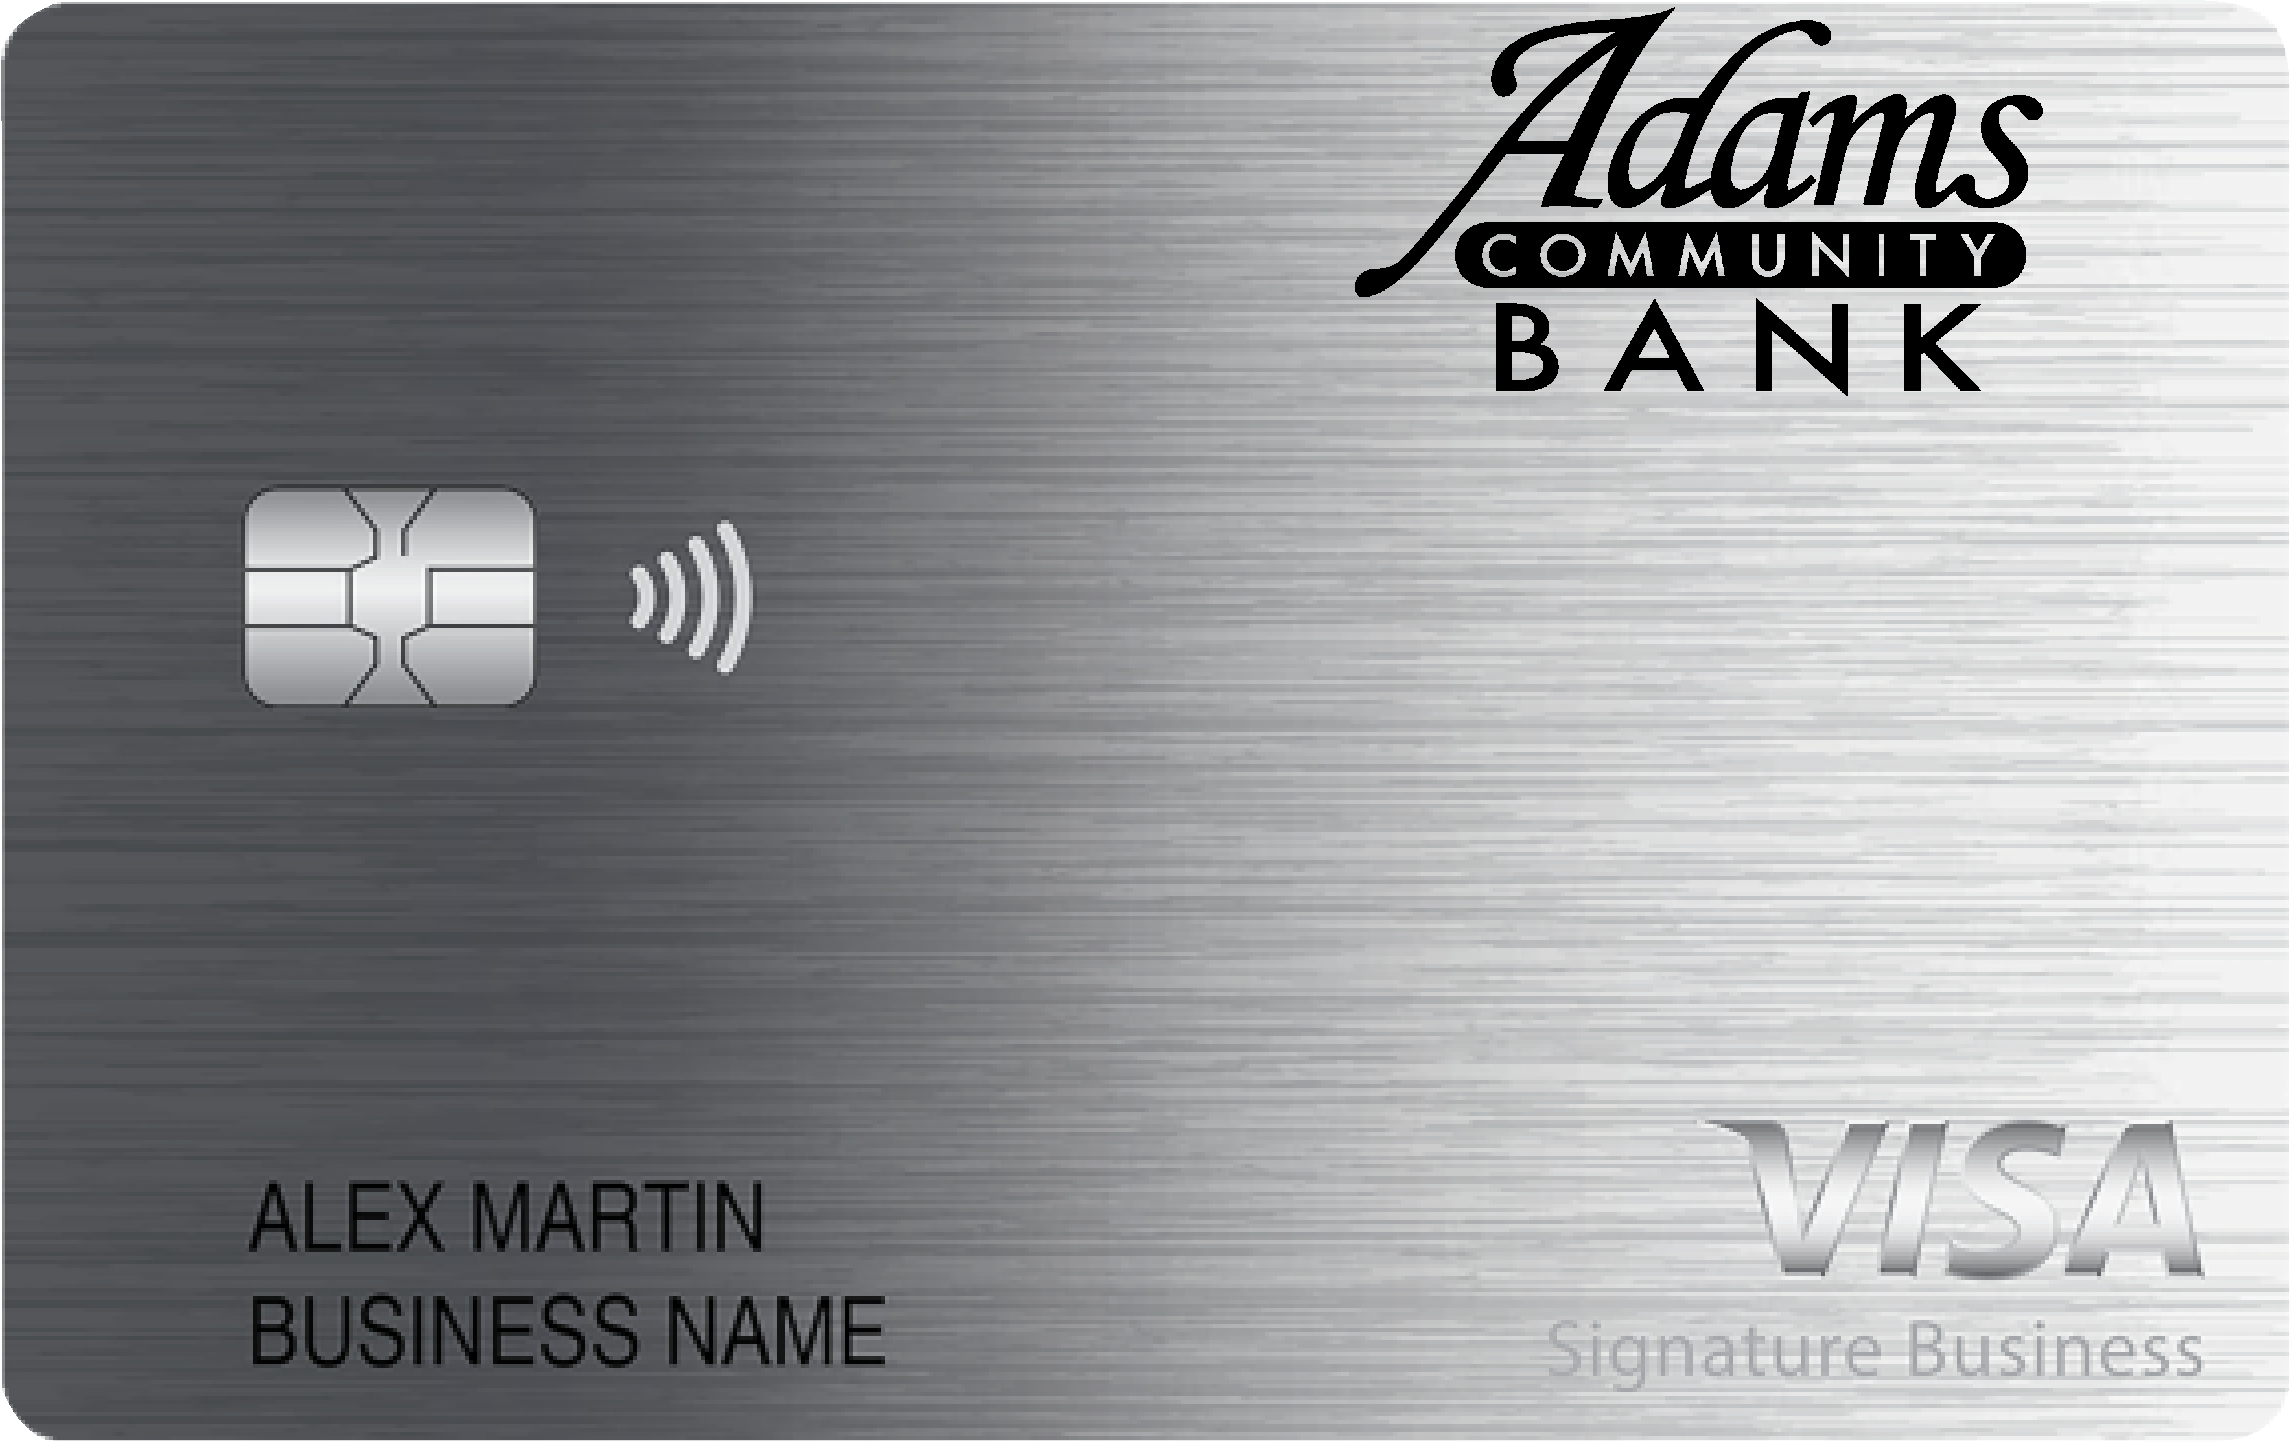 Adams Community Bank Smart Business Rewards Card